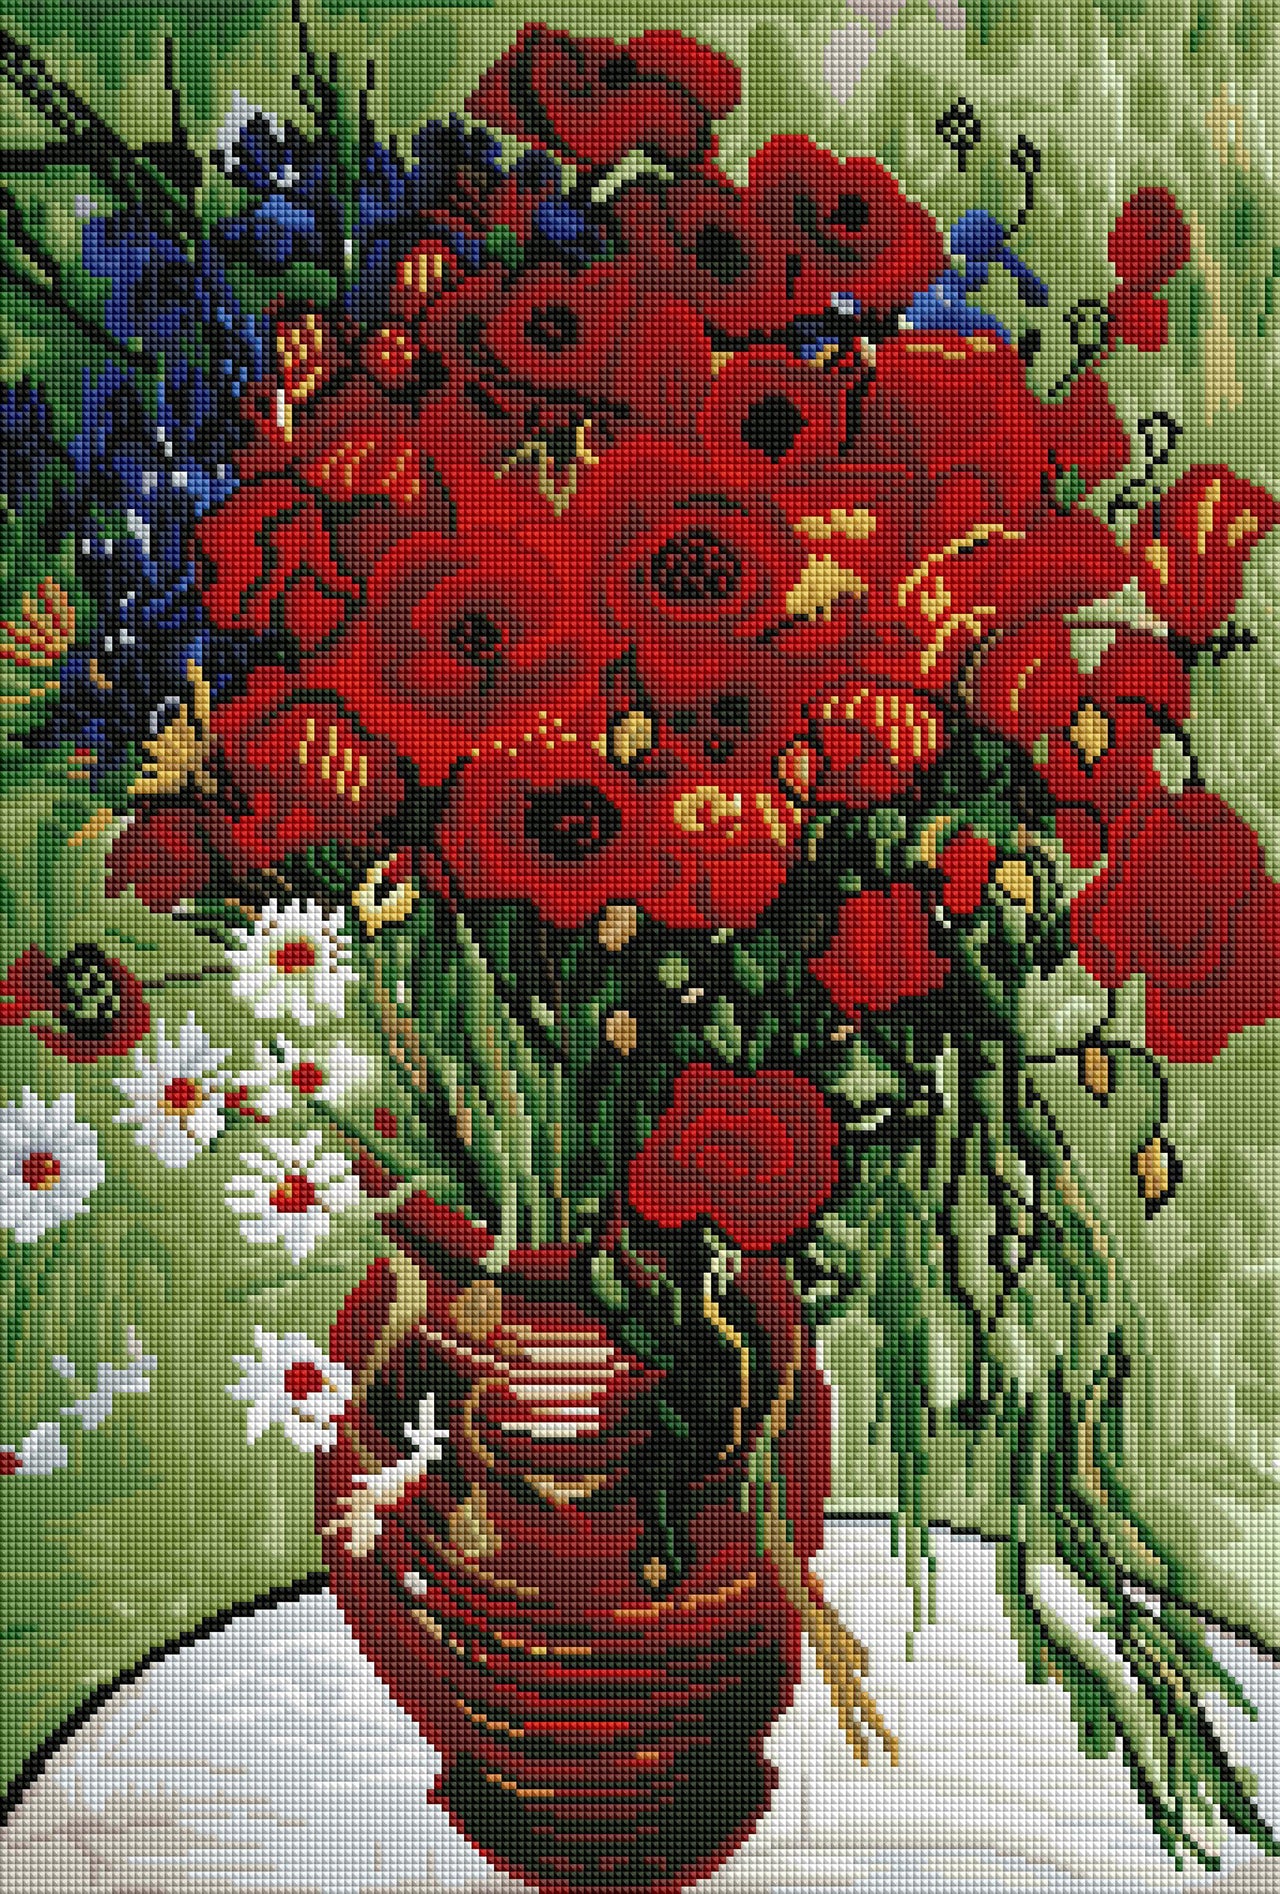 Diamond Painting Vase Avec Marguerites At Coquelicot 17" x 25" (43cm x 64cm) / Square With 41 Colors Including 4 ABs / 43,263